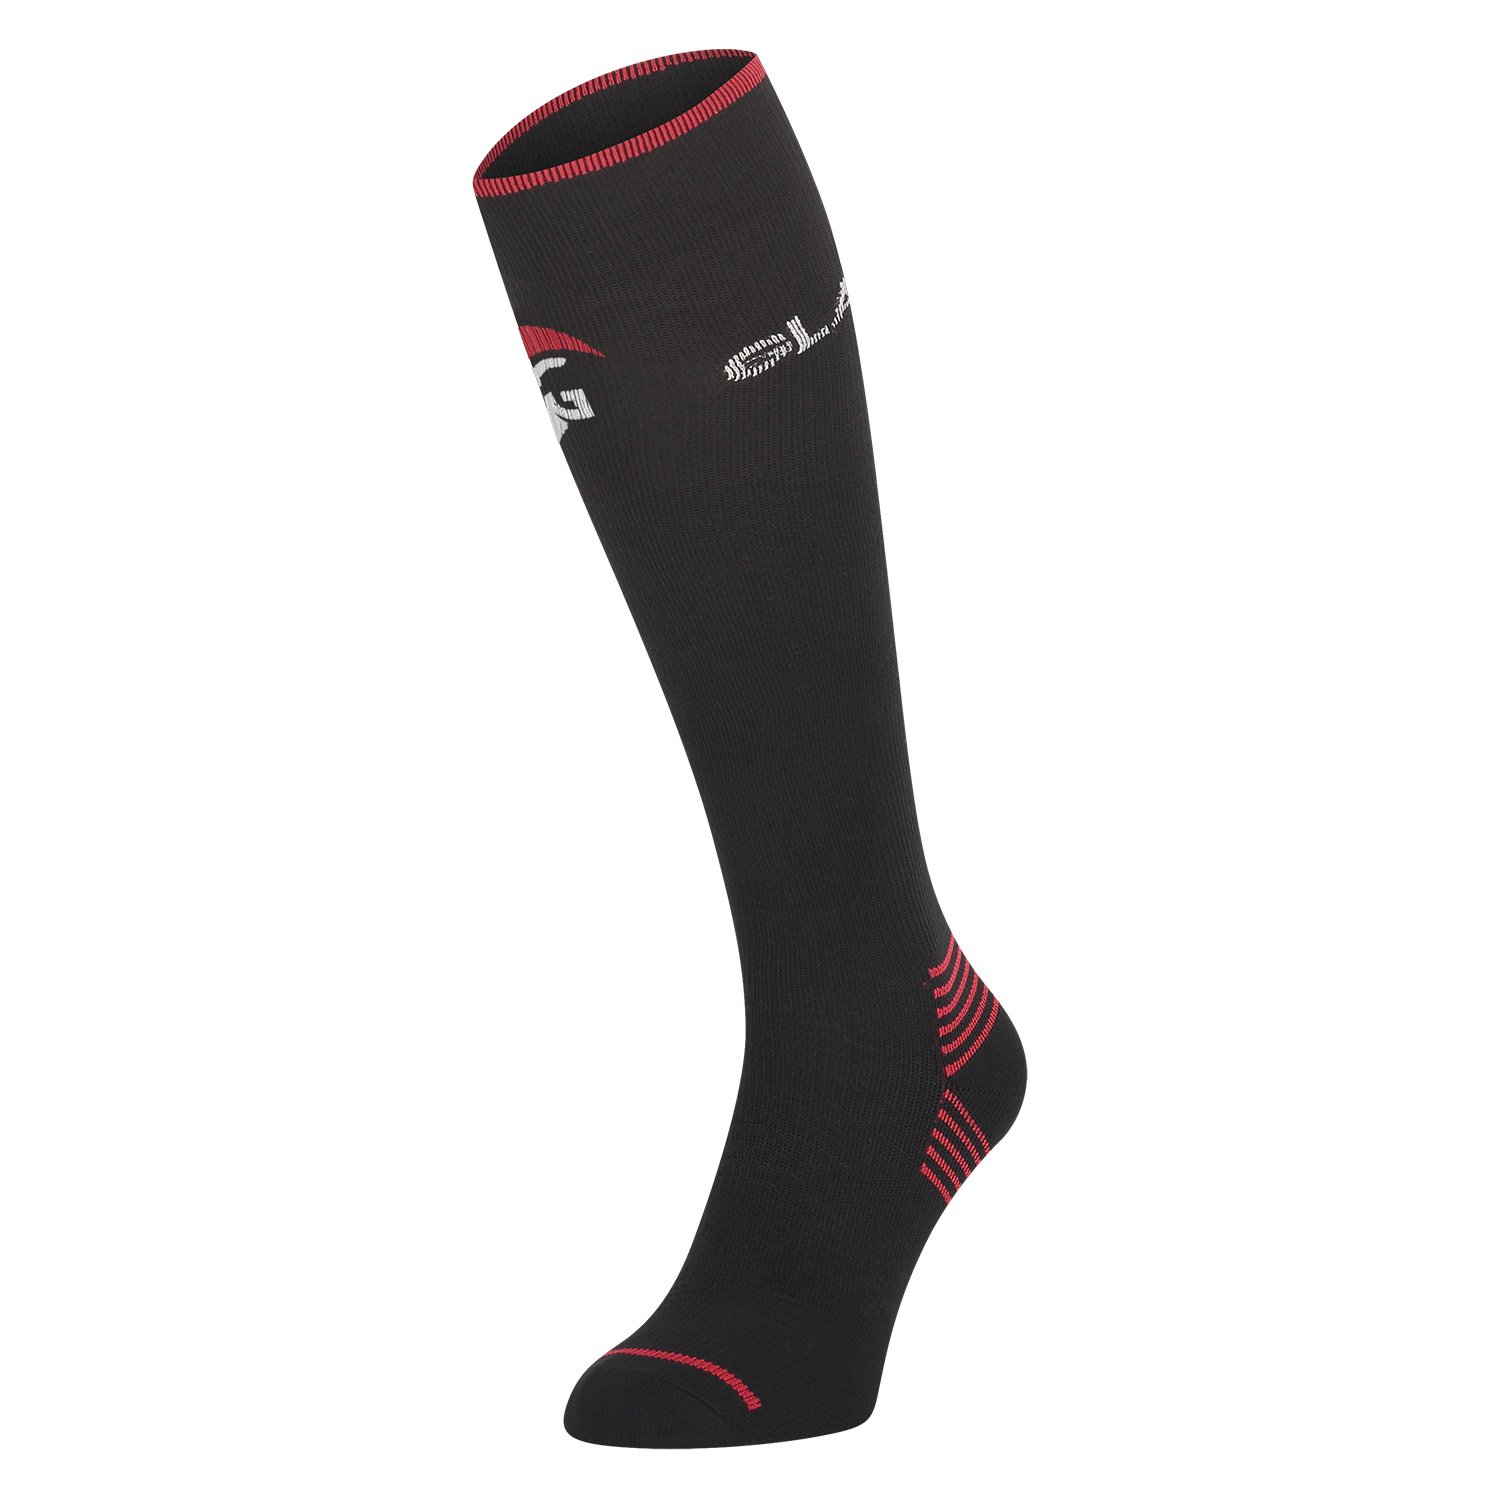 gladiator sports compression stockings in black